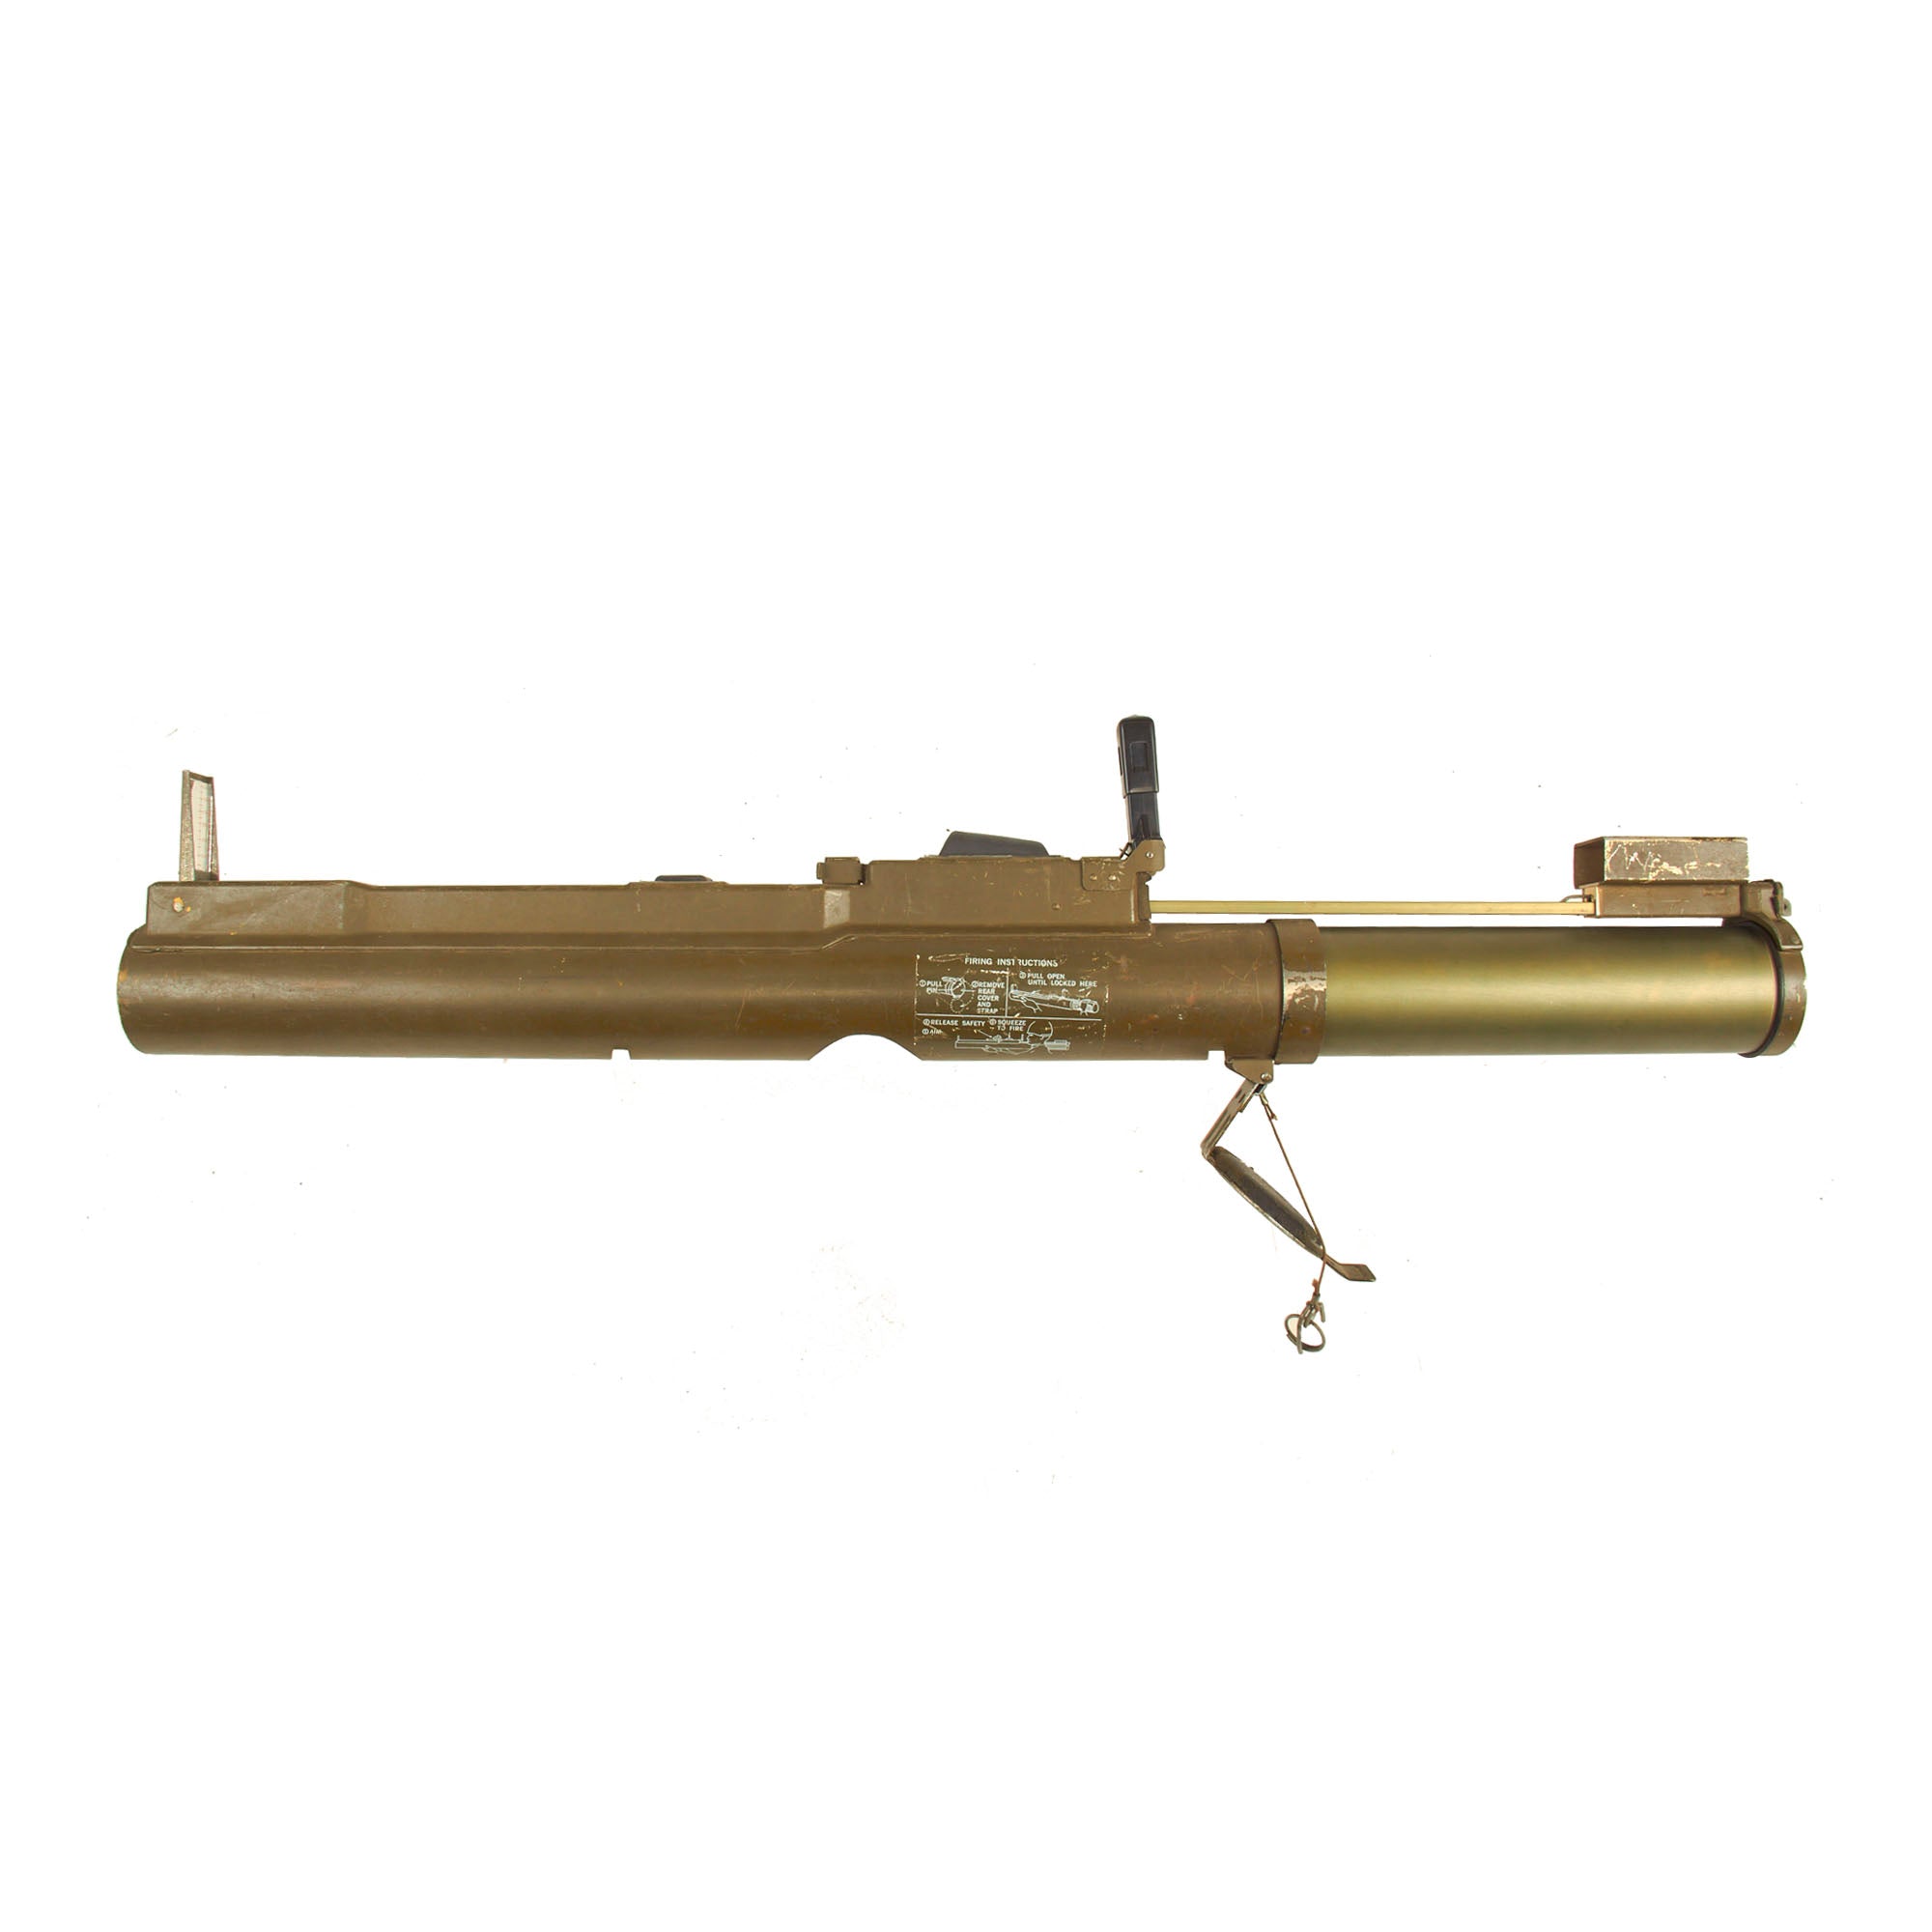 Original U.S. Cold War Era M72A2 Light Anti-Armor Weapon “LAW 